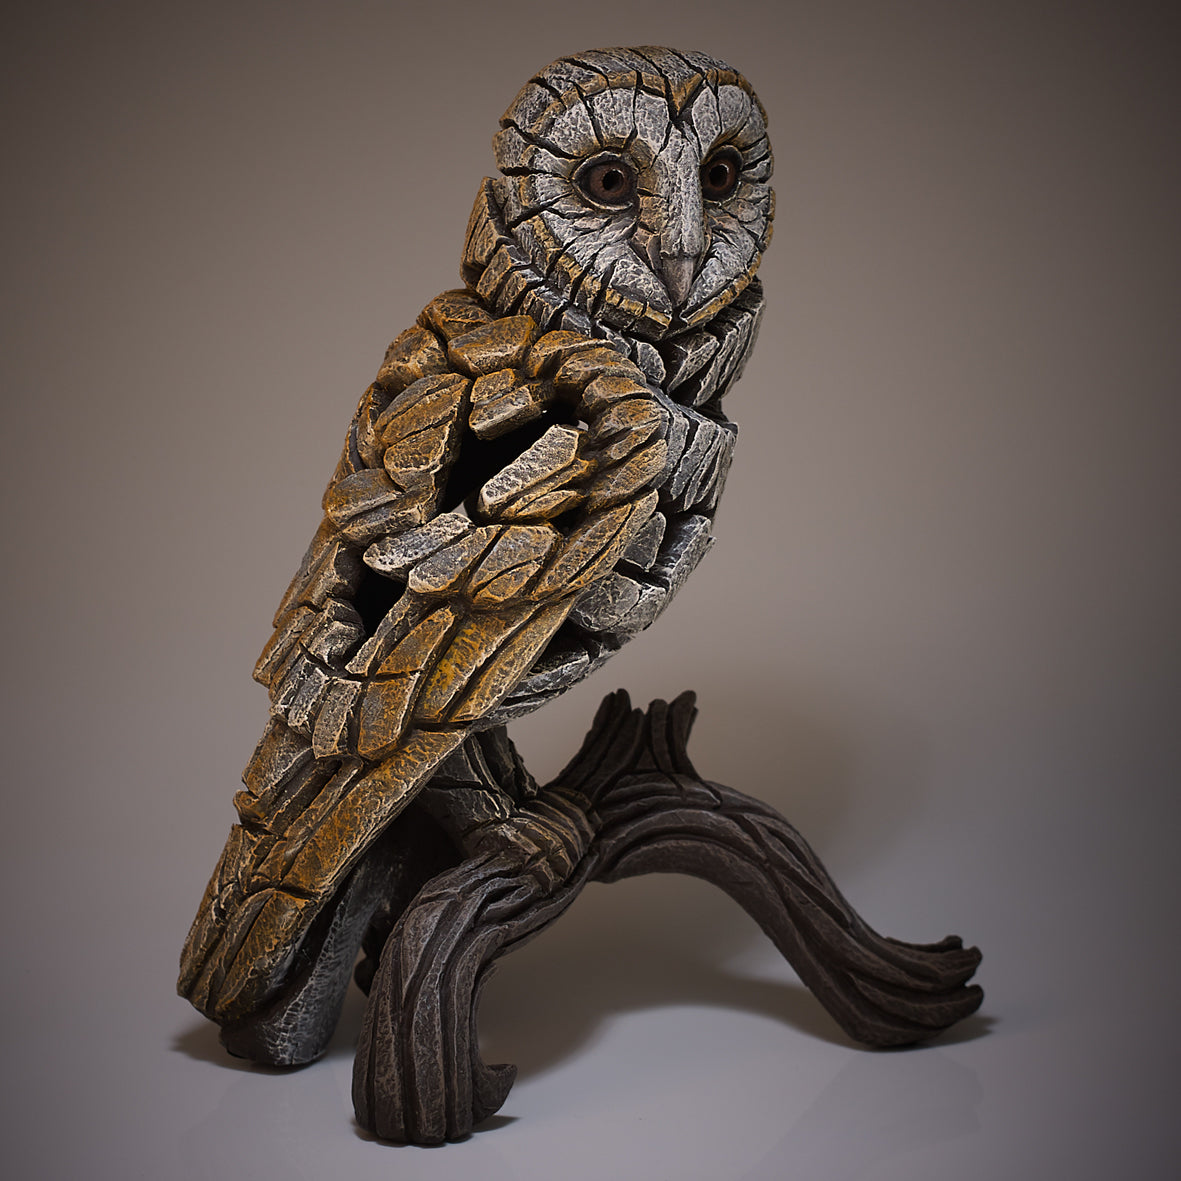 Edge barn owl